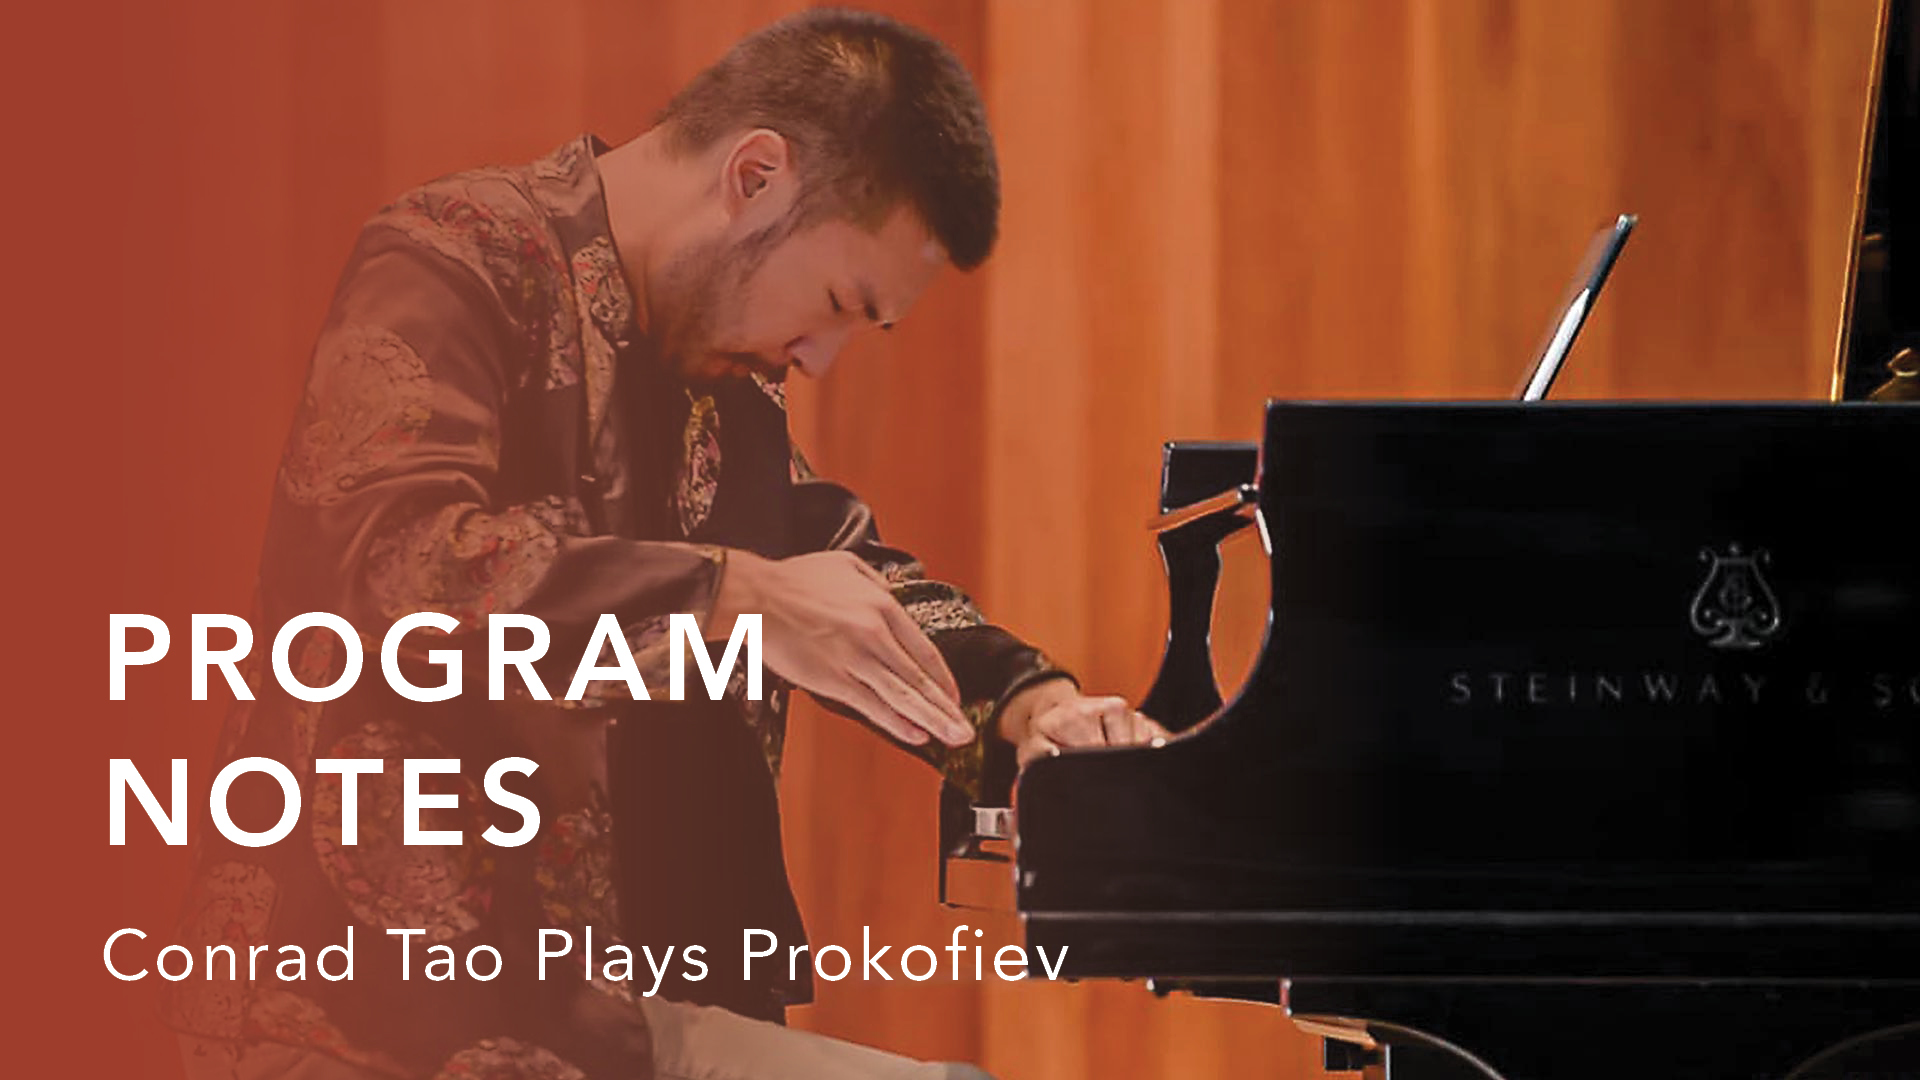 Featured image for “Program Notes: Conrad Tao Plays Prokofiev”